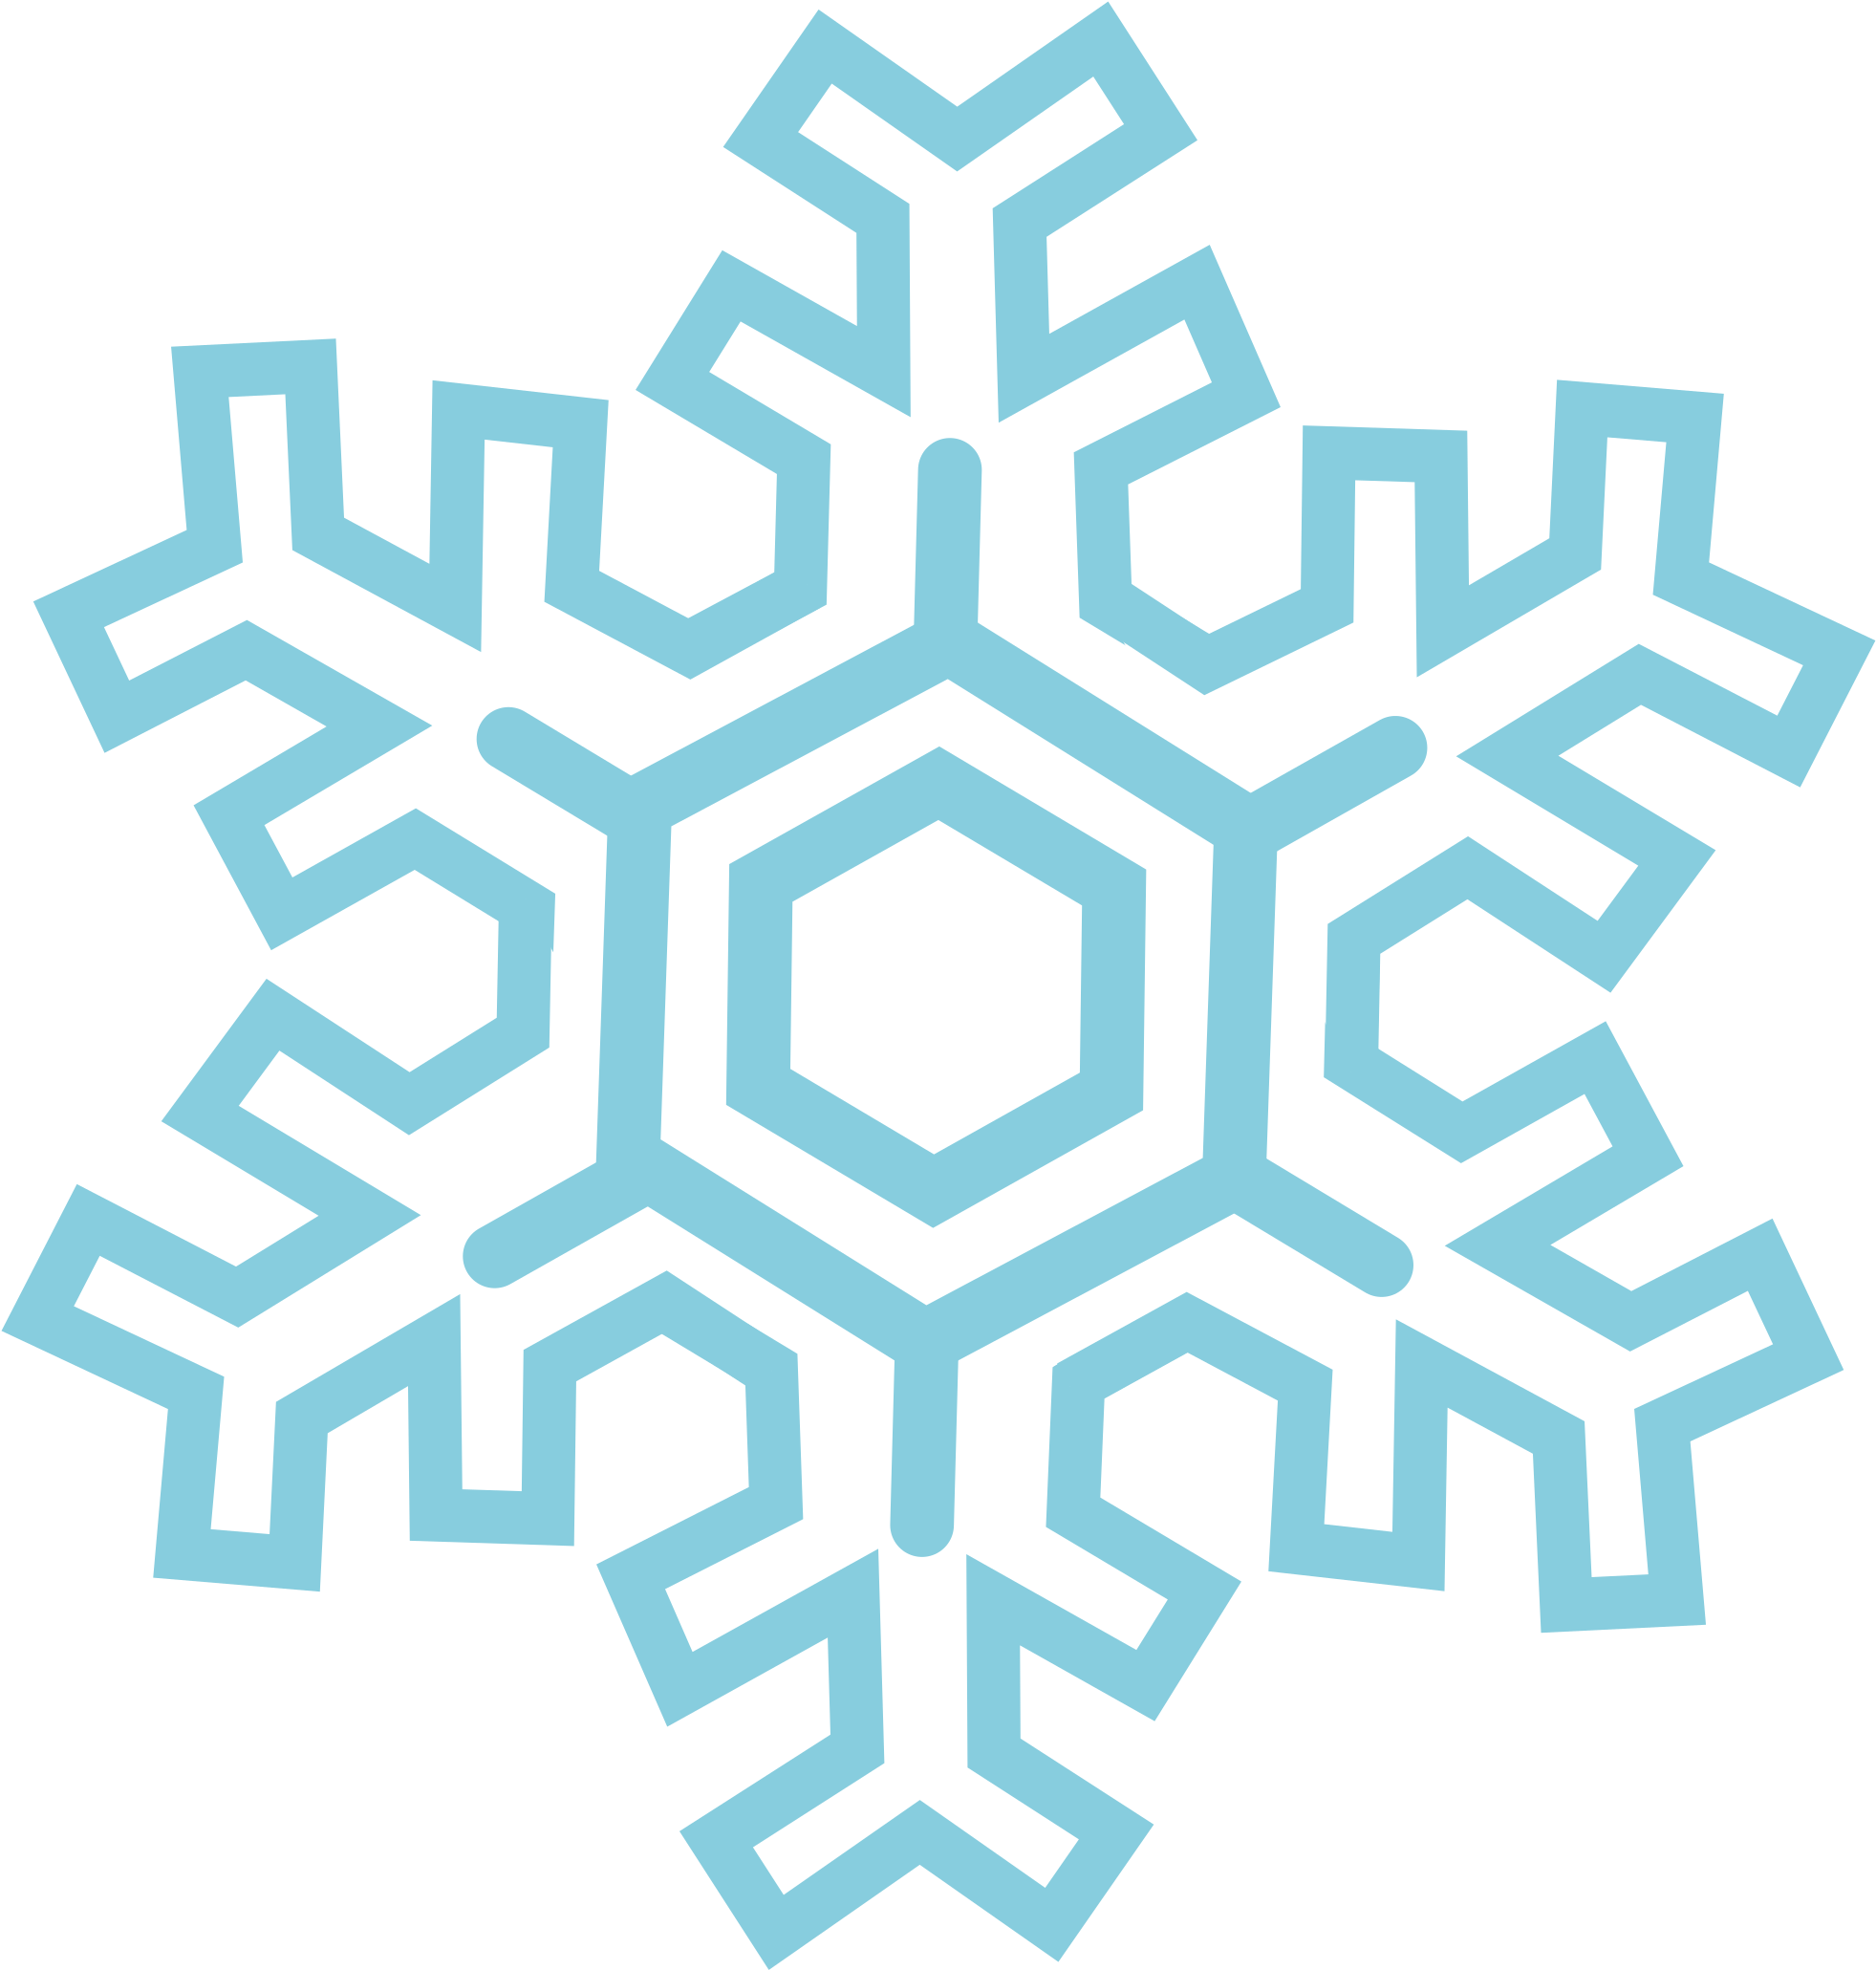 Snowflake - Snowflake Image Transparent Background Png (2300x2400)